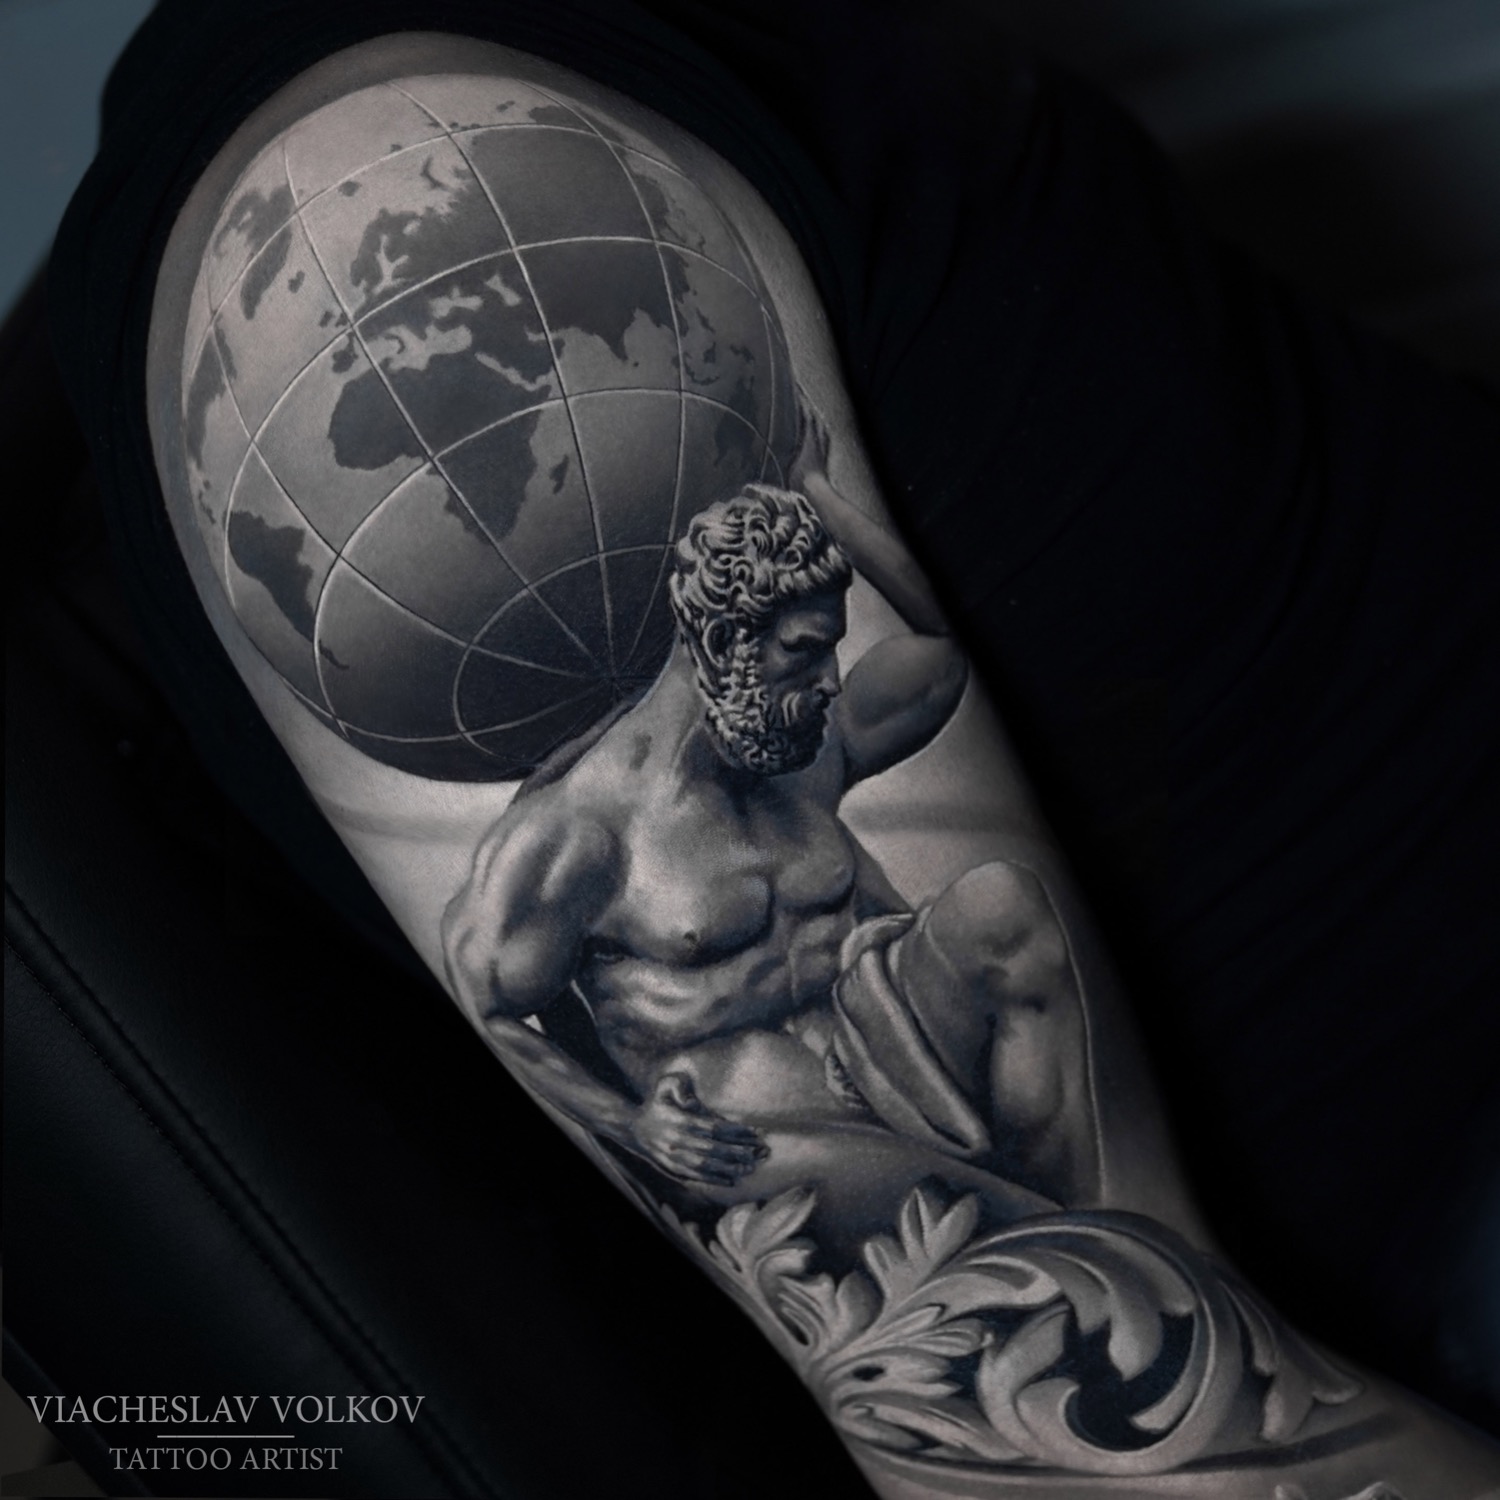 Oneline Atlas tattooed on the inner forearm, fine line